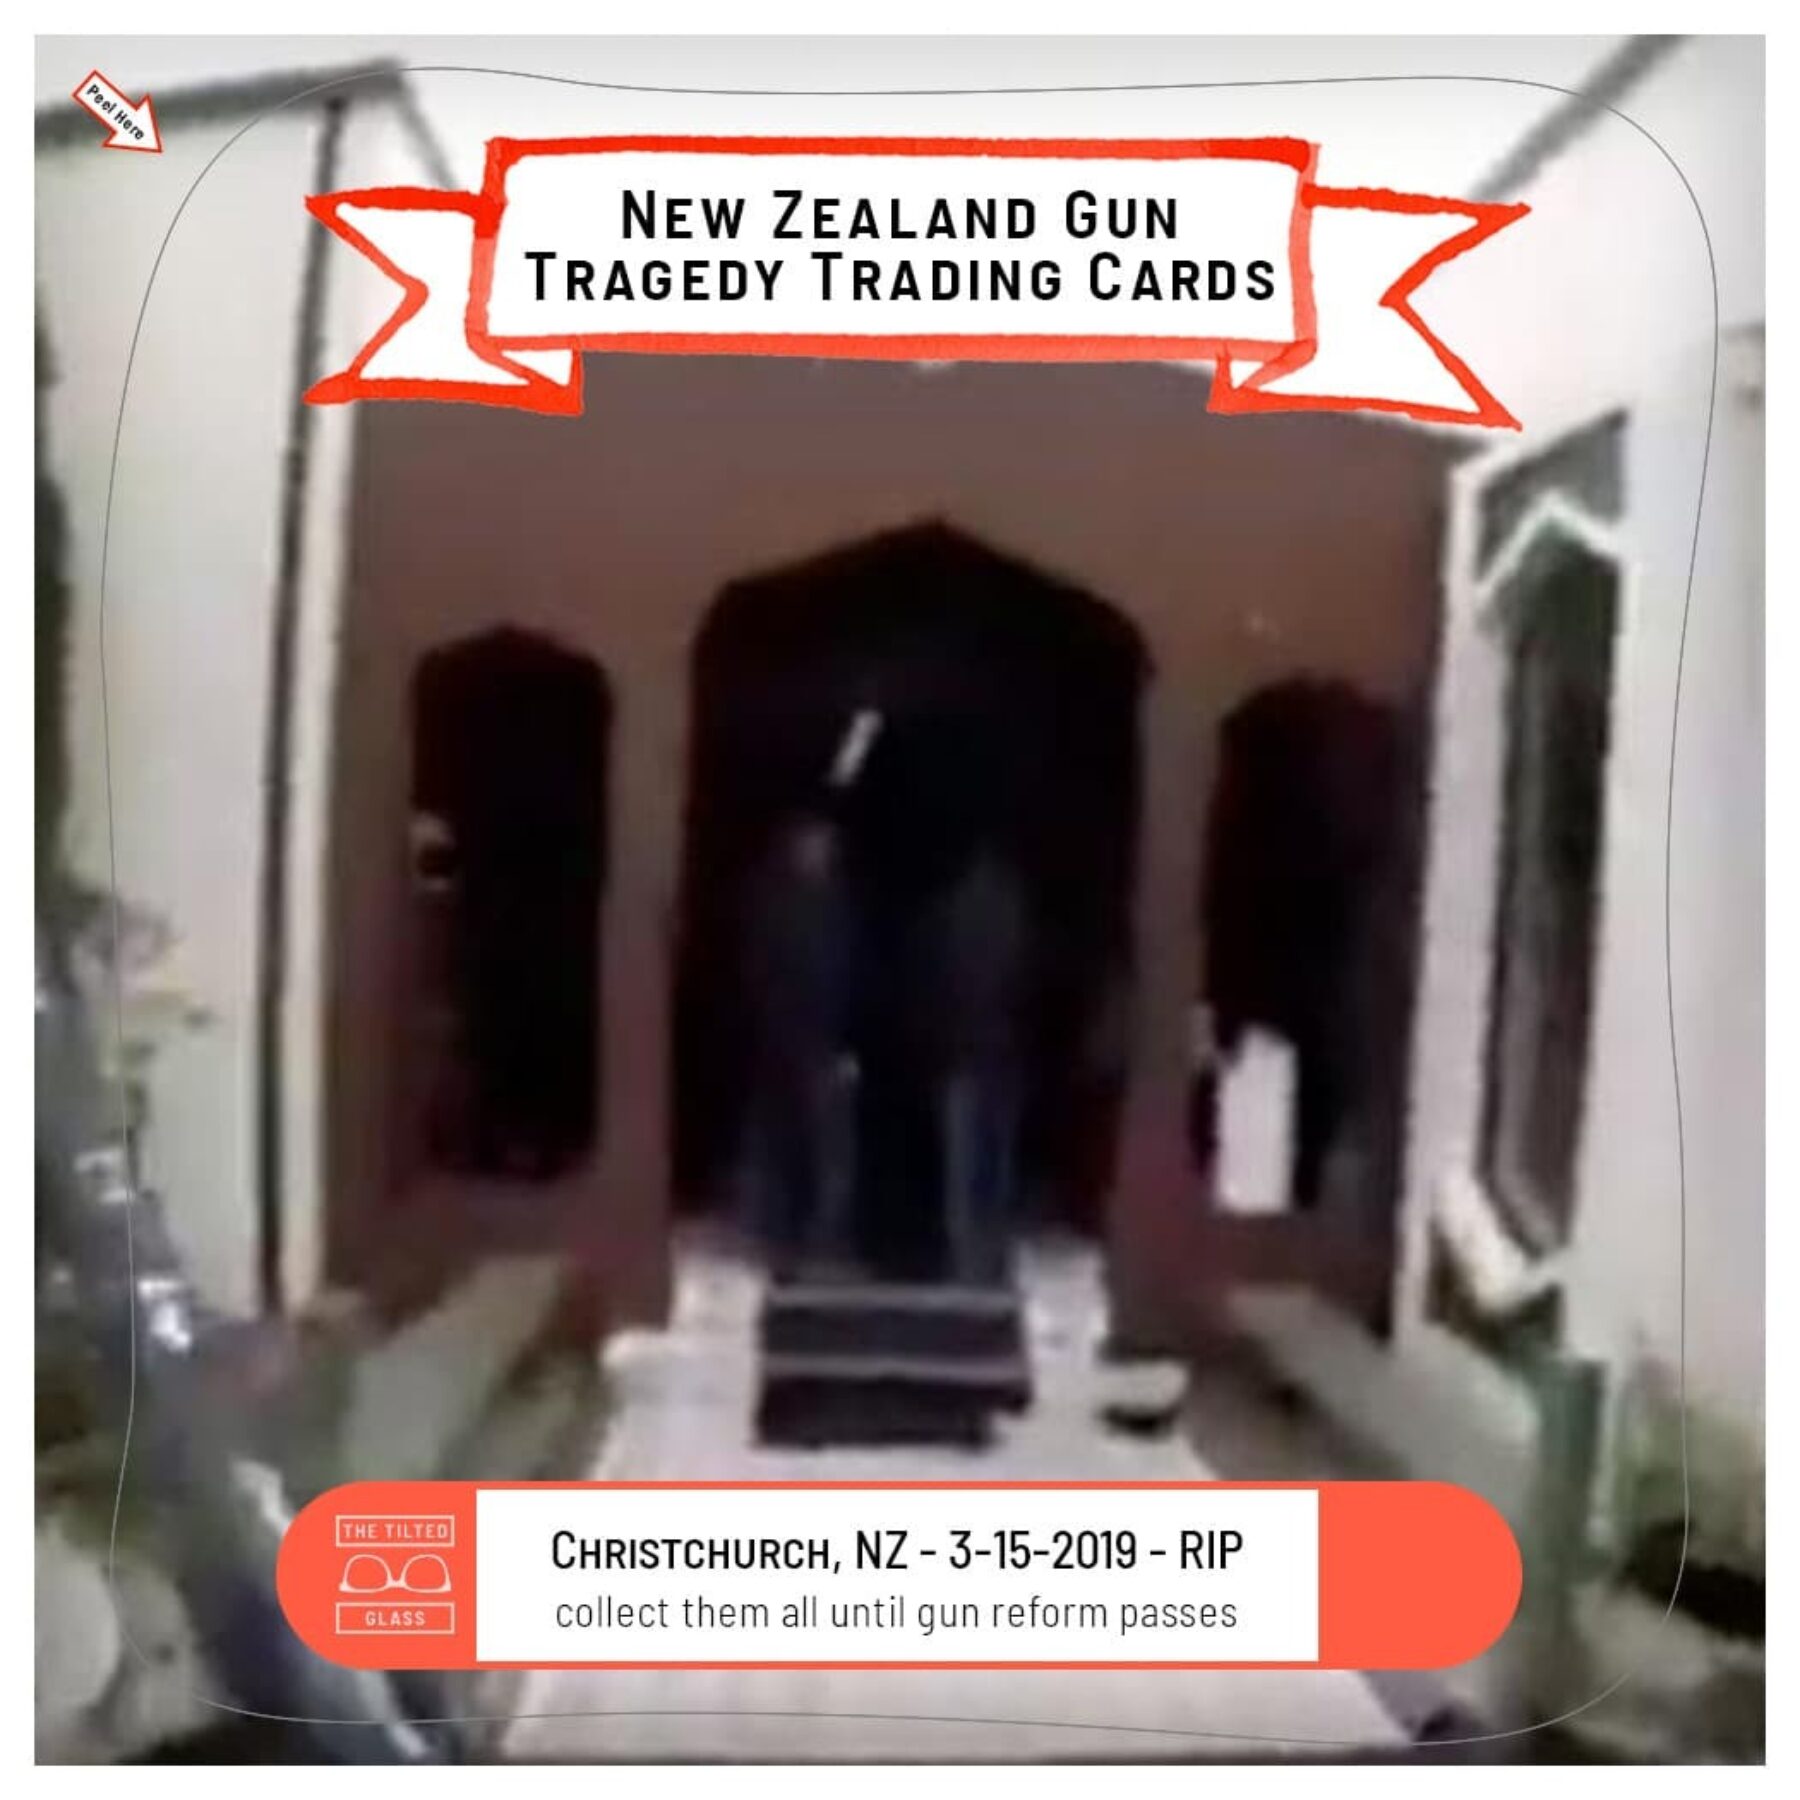 New Zealand Gun Tragedy Trading Cards - 3-15-2019